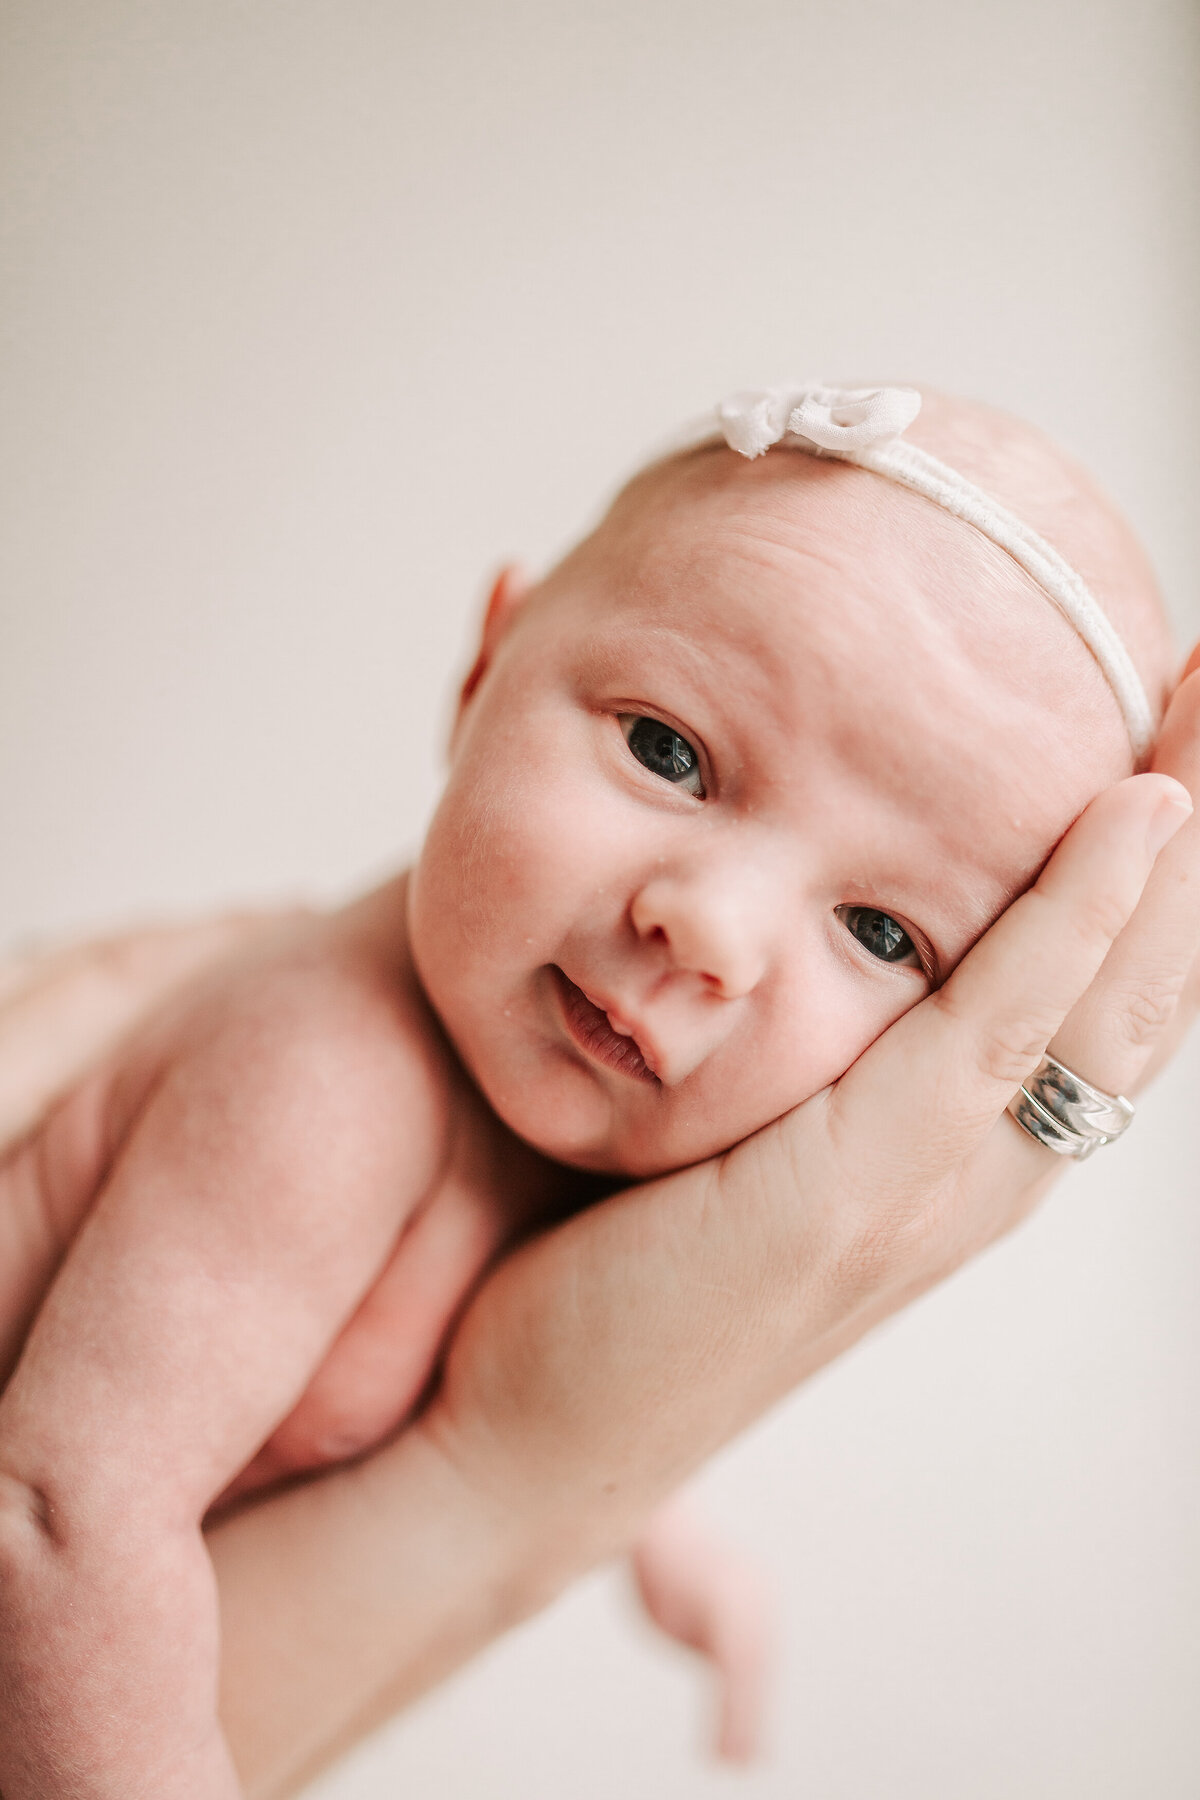 Collingwood Home Newborn Photographer - Katie Lintern (11)